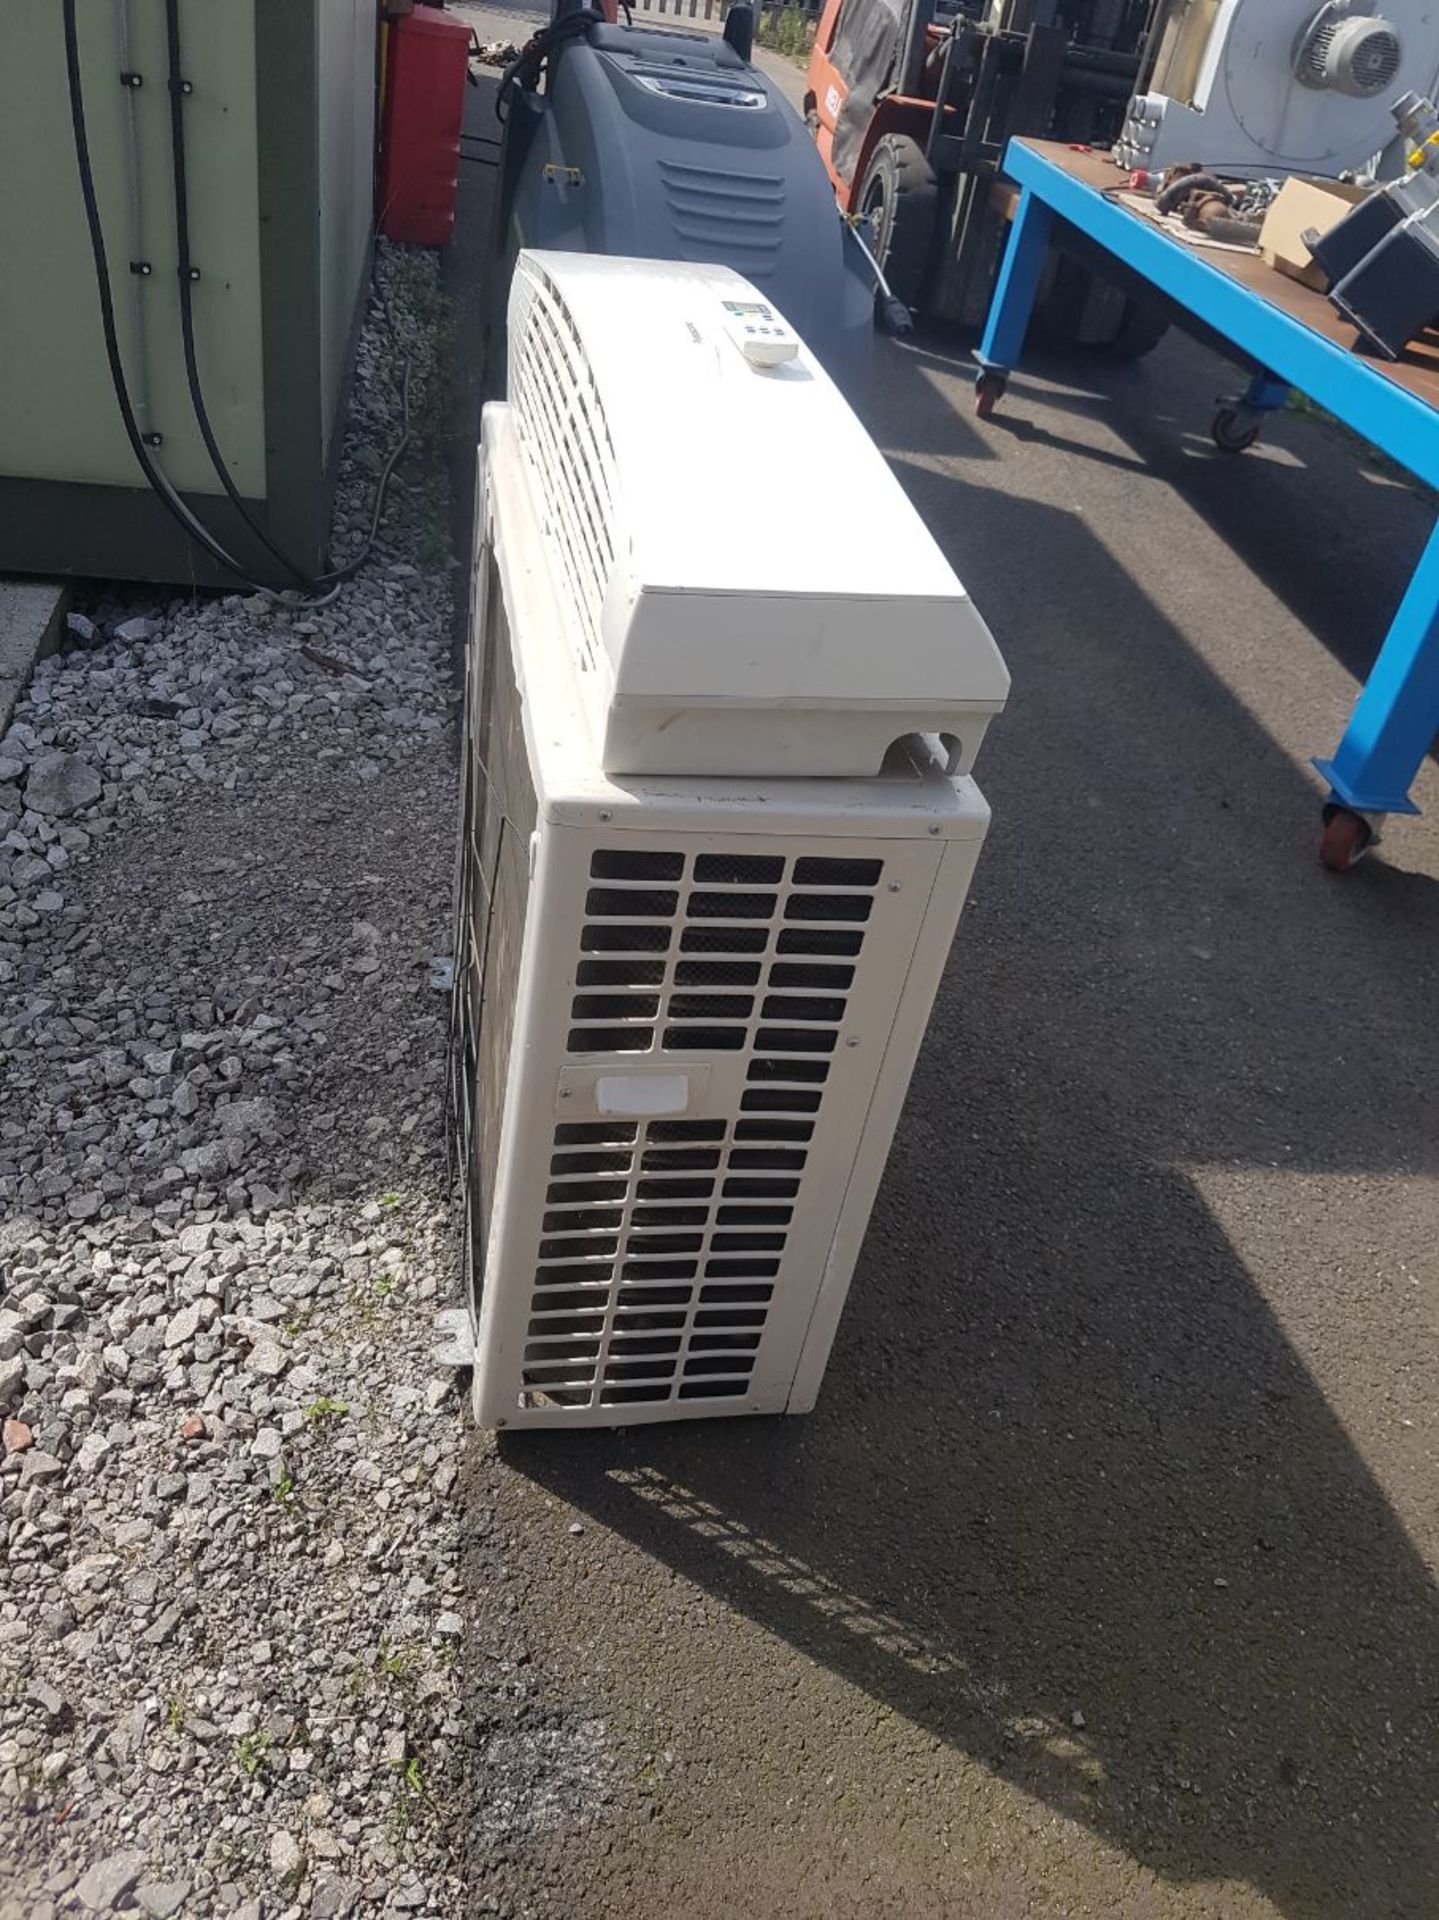 Panasonic heat pump air conditioning unit - Image 7 of 7